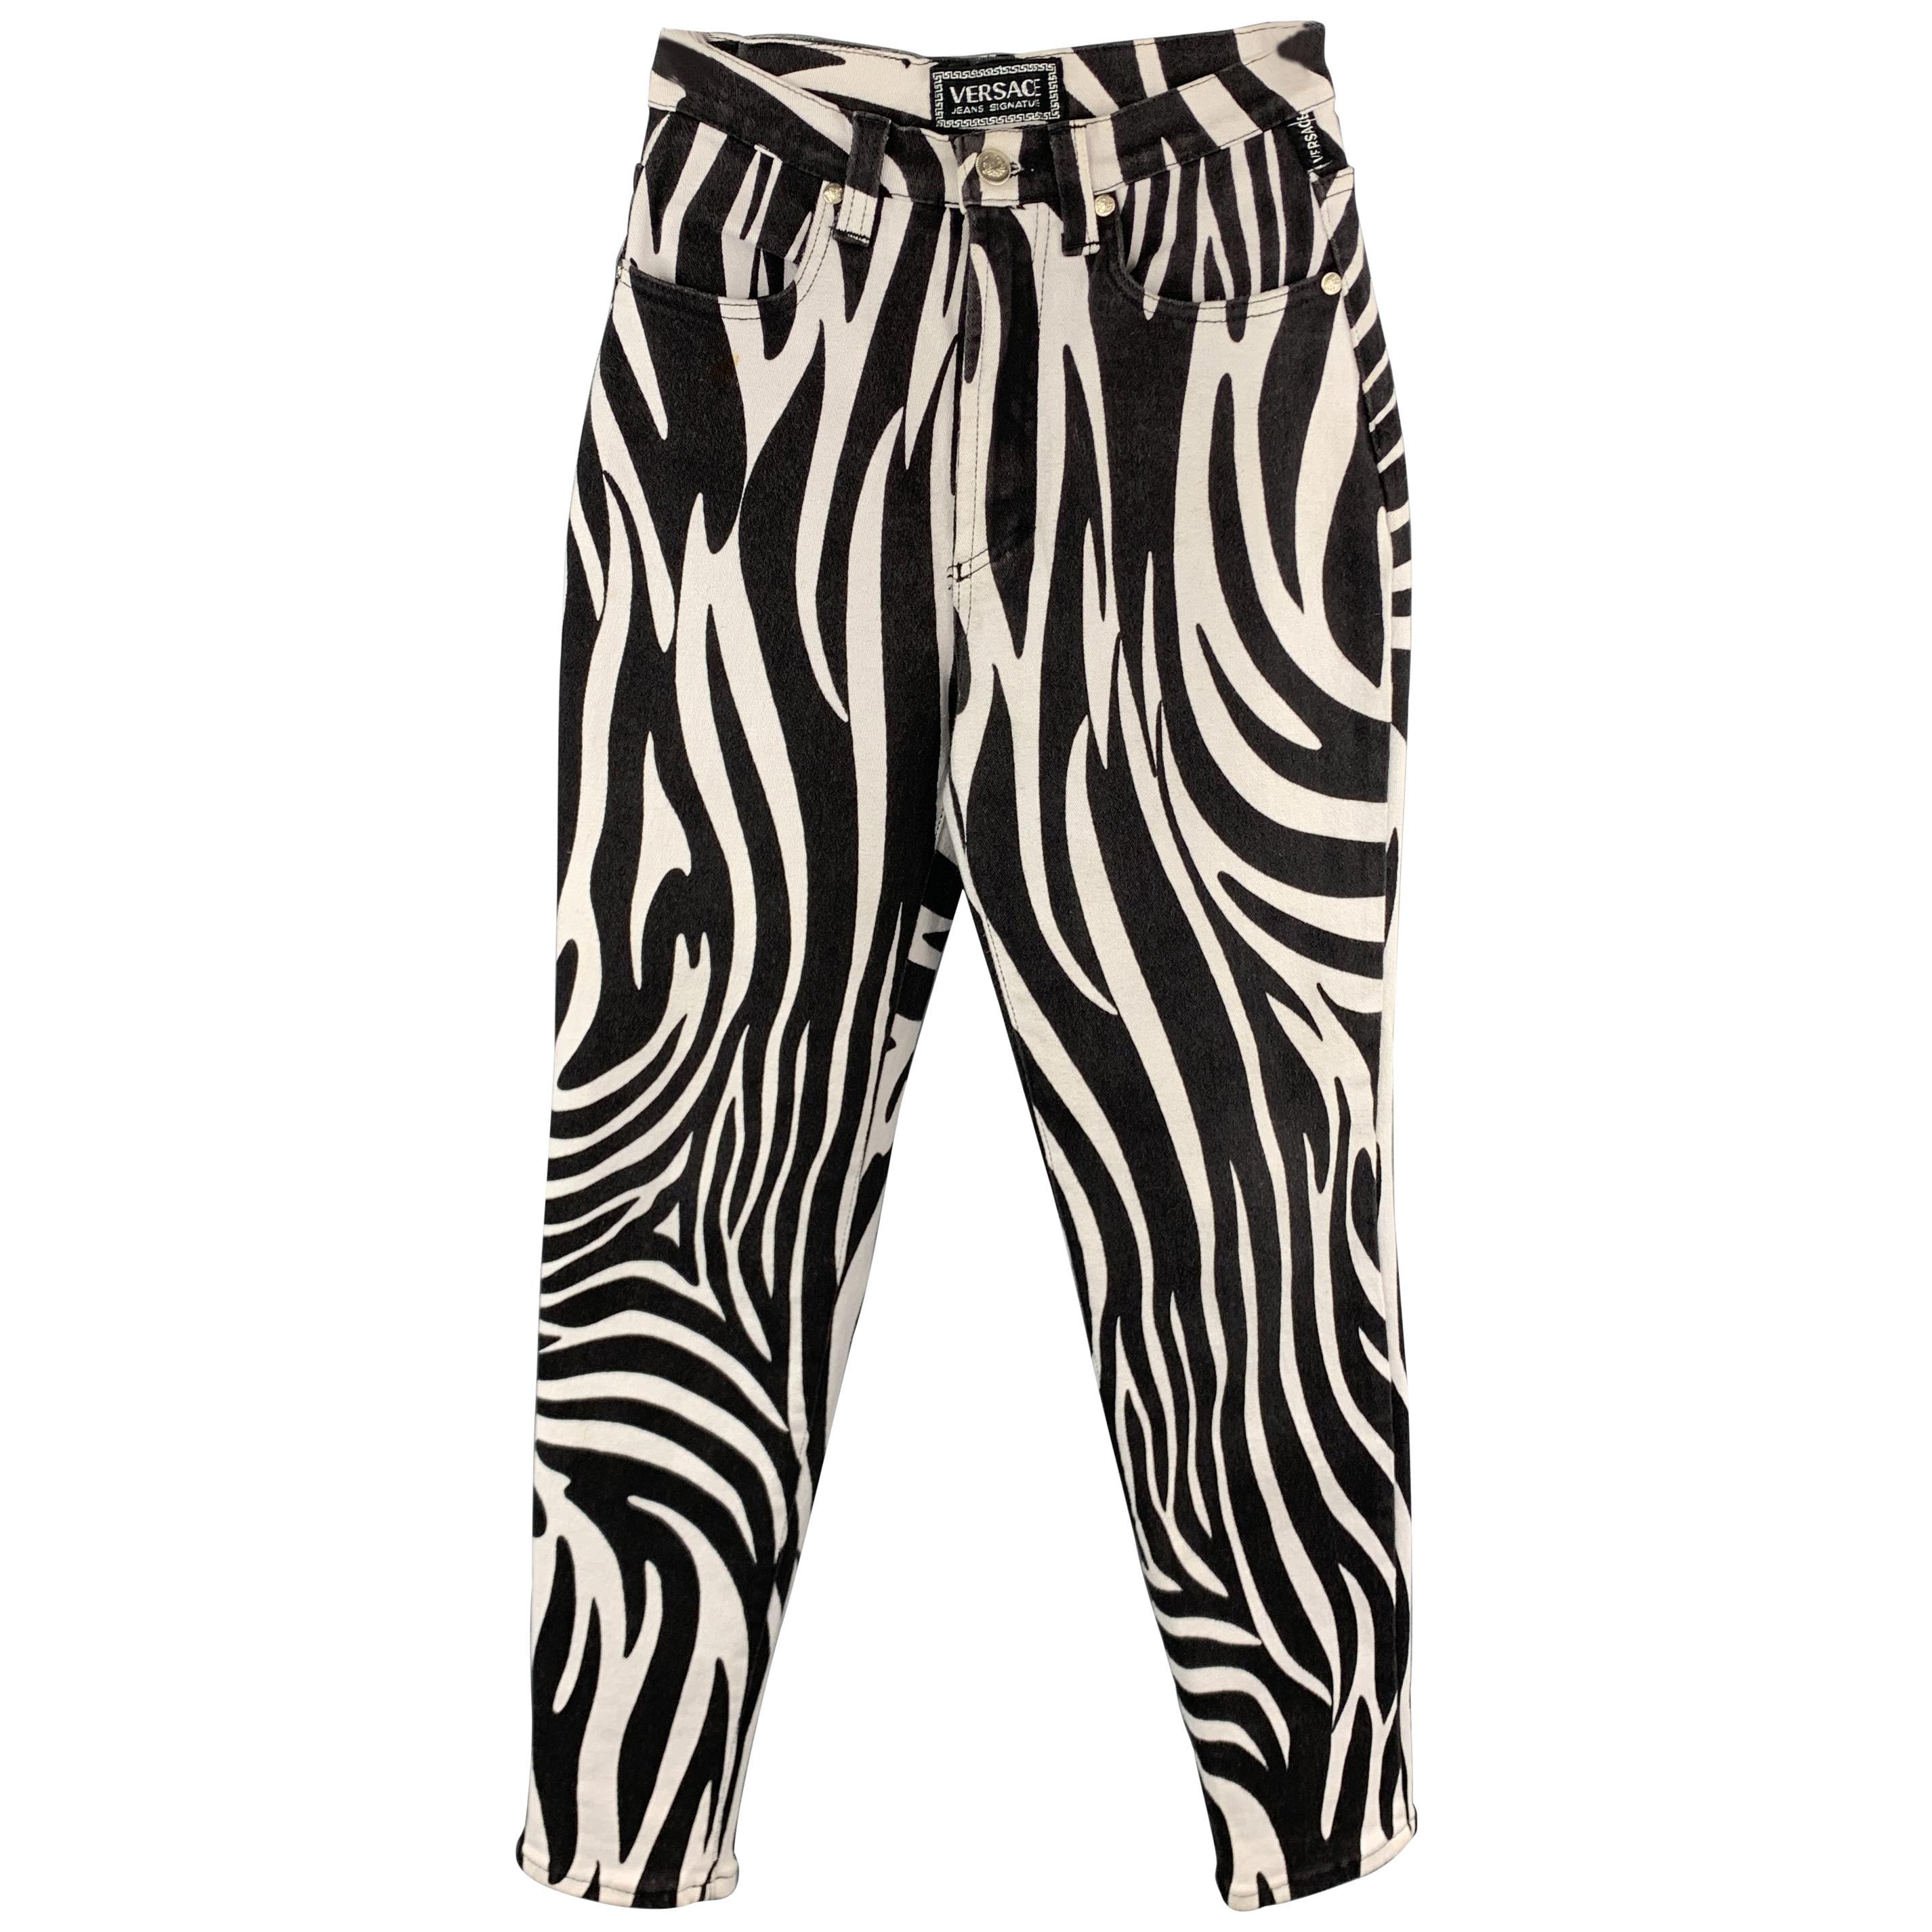 VERSACE JEANS SIGNATURE Size 28 Black & White Zebra Print High Rise Jeans